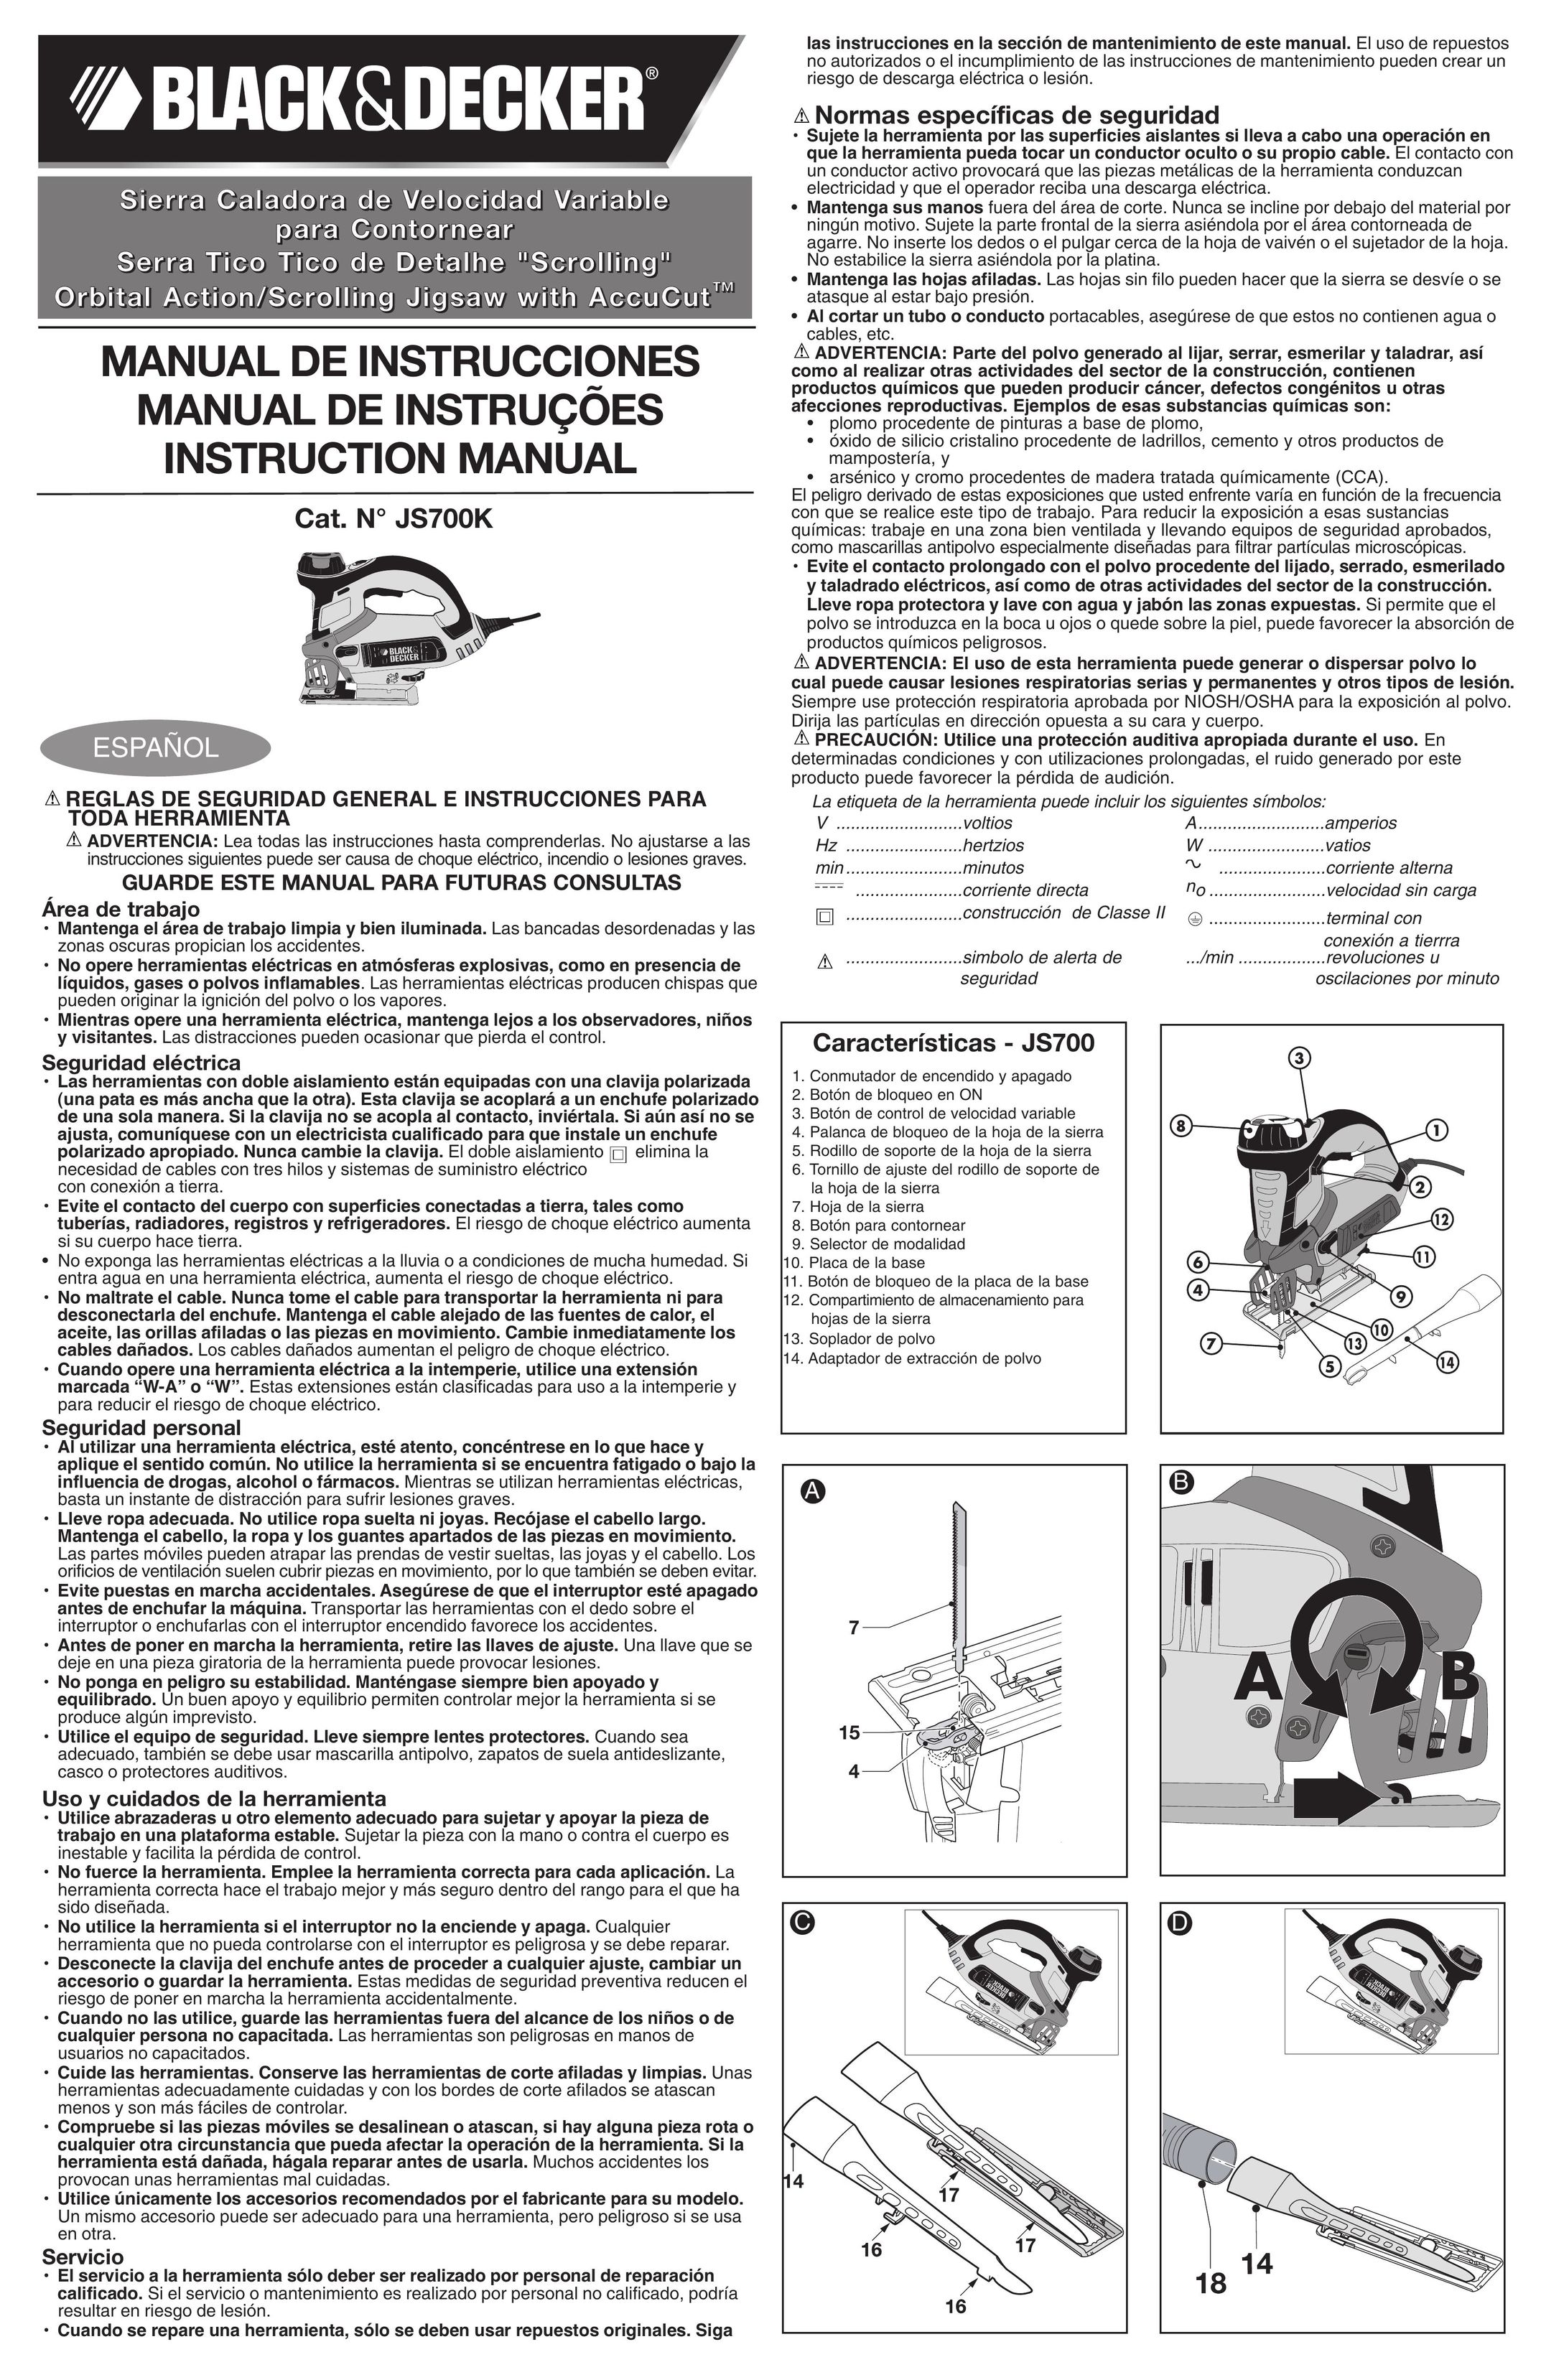 Black & Decker 587384-03 Saw User Manual